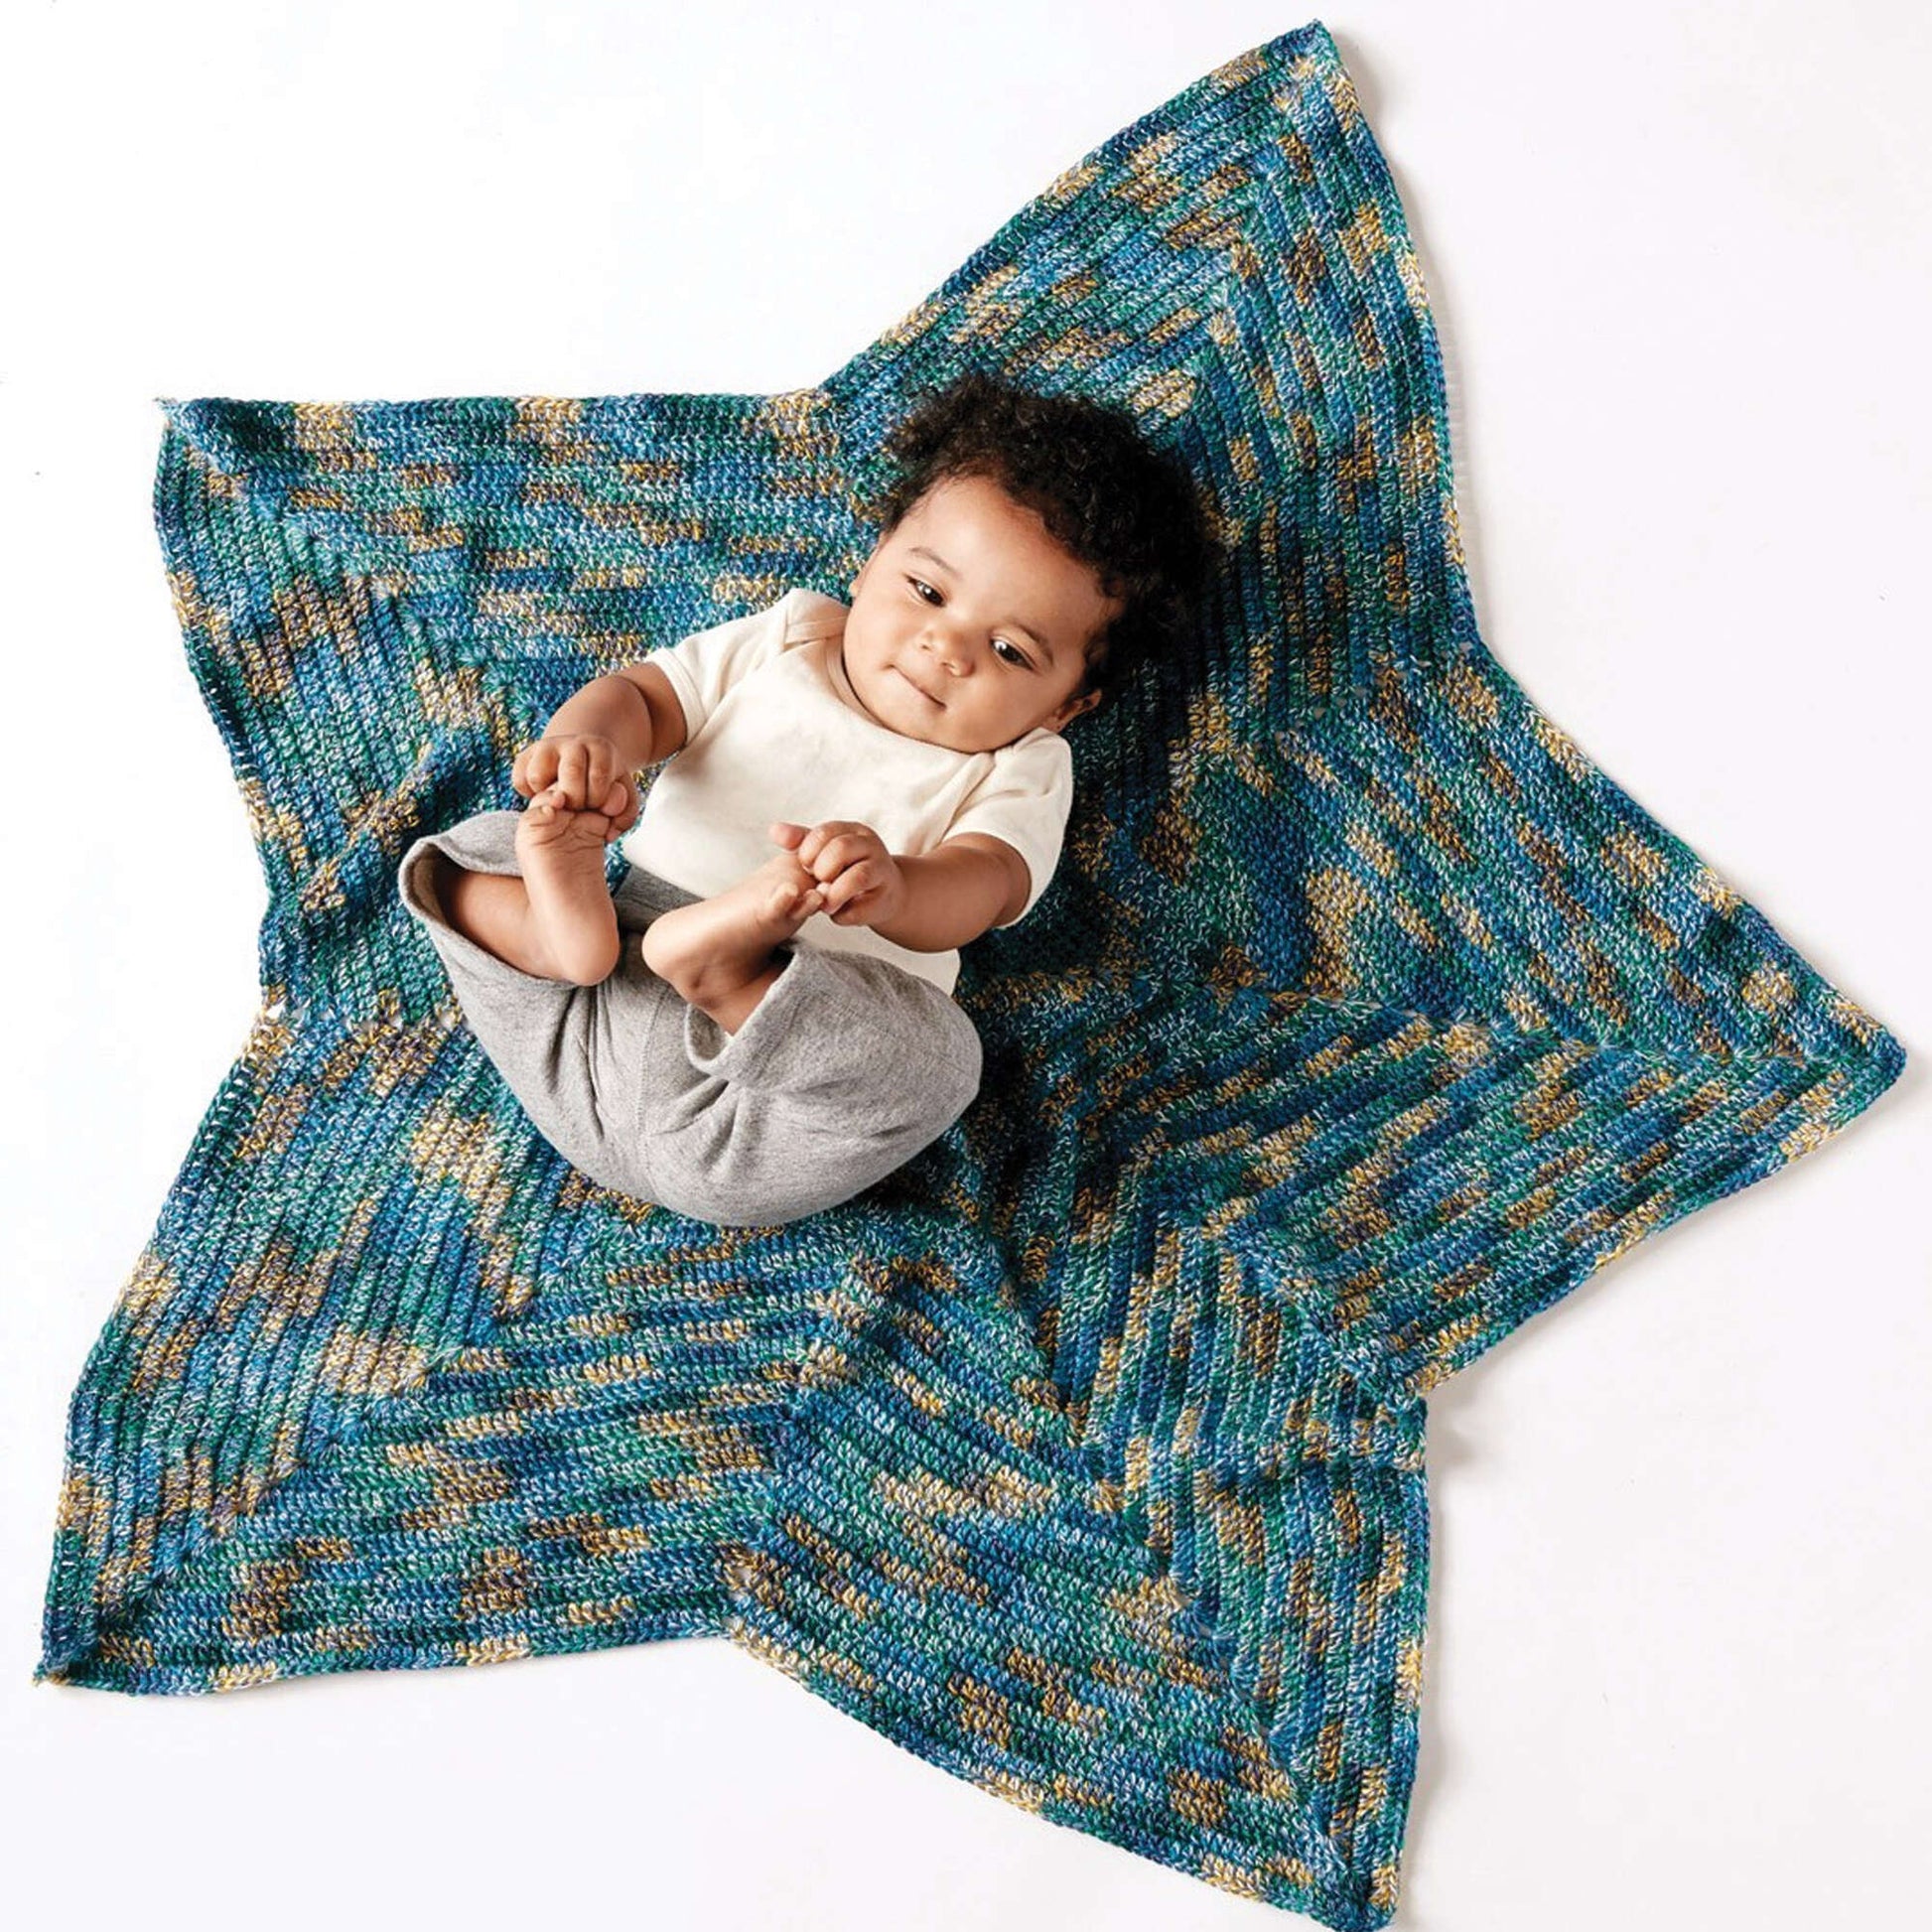 Bernat Starlight Crochet Blanket Crochet Blanket made in Bernat Softee Baby yarn